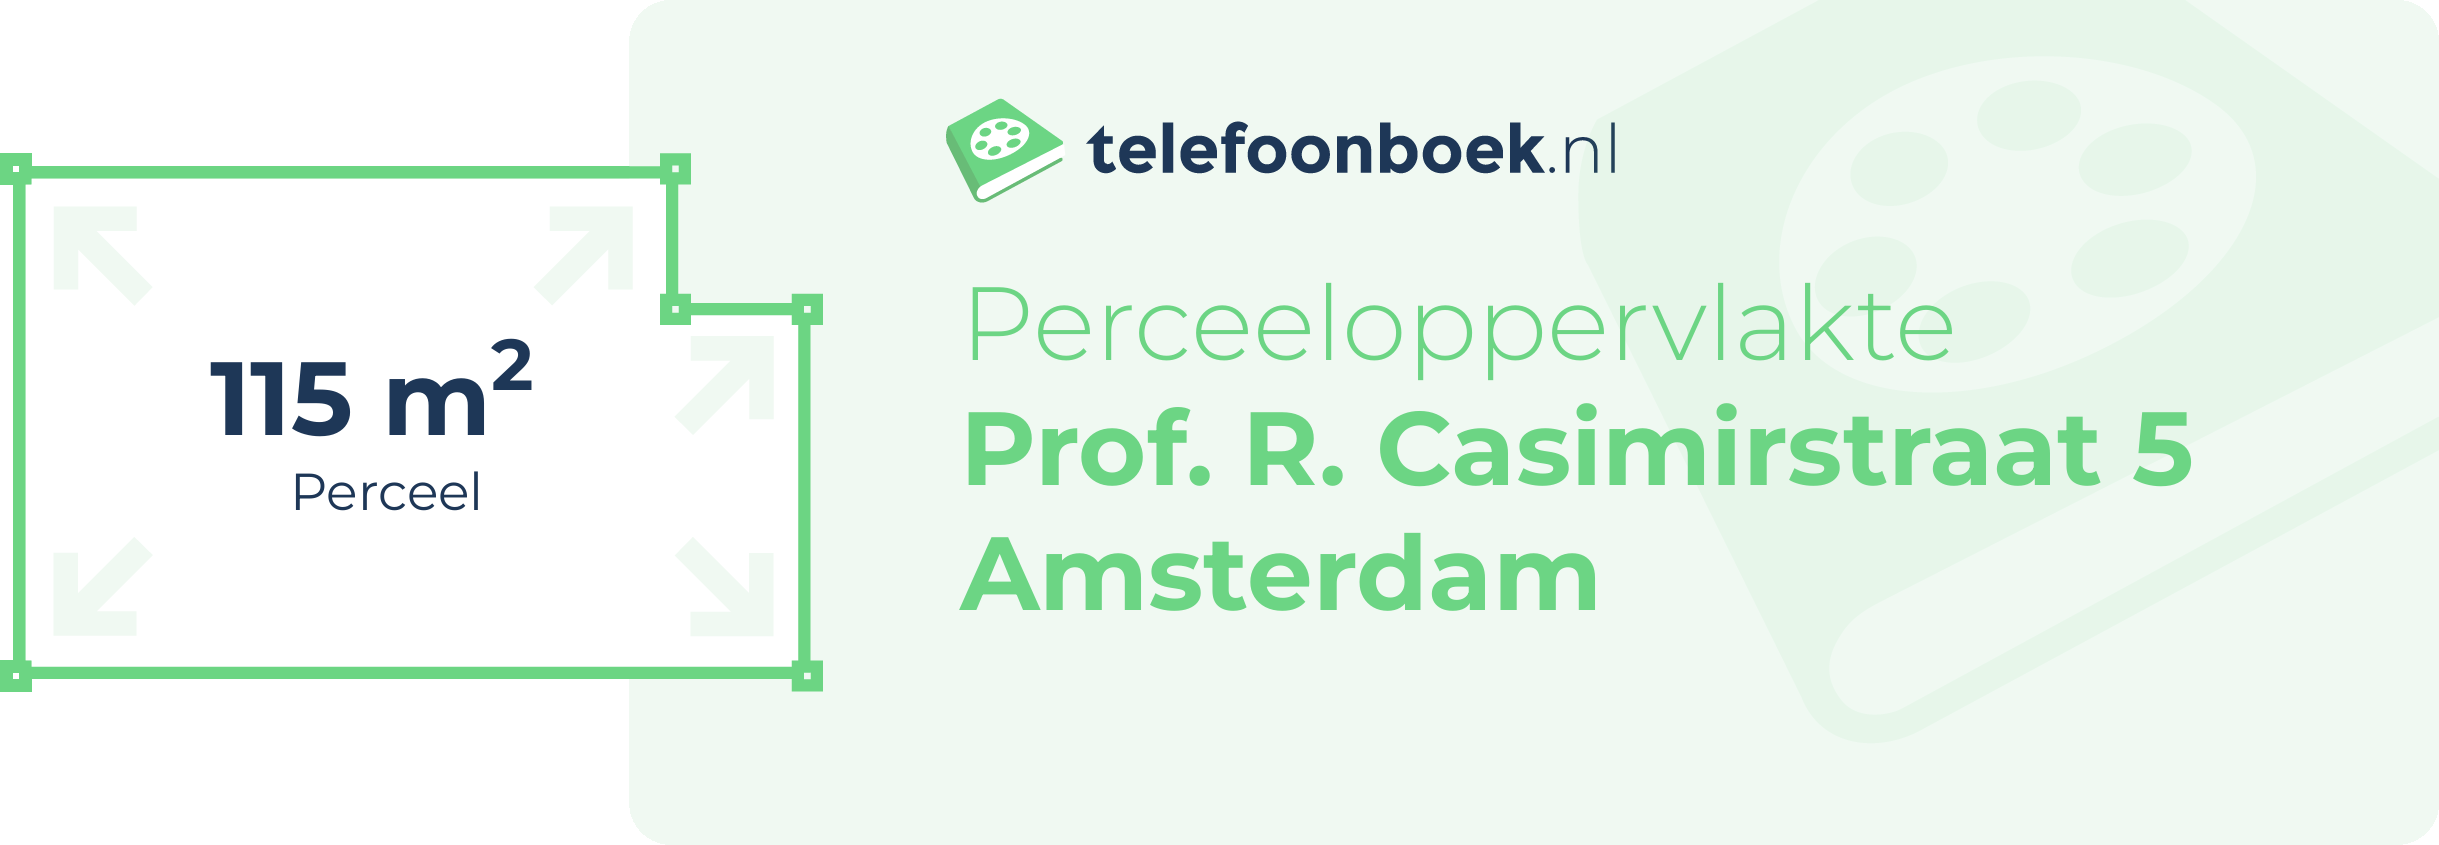 Perceeloppervlakte Prof. R. Casimirstraat 5 Amsterdam